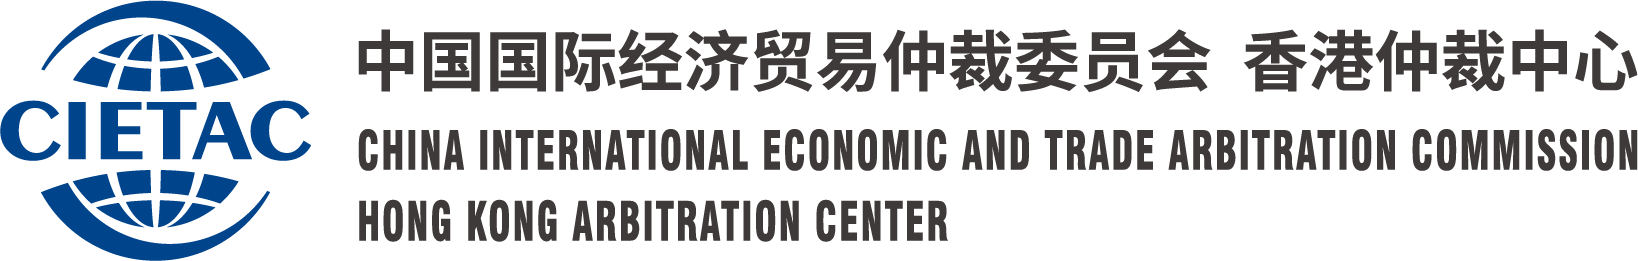 CIETAC Hong Kong Arbitration Center